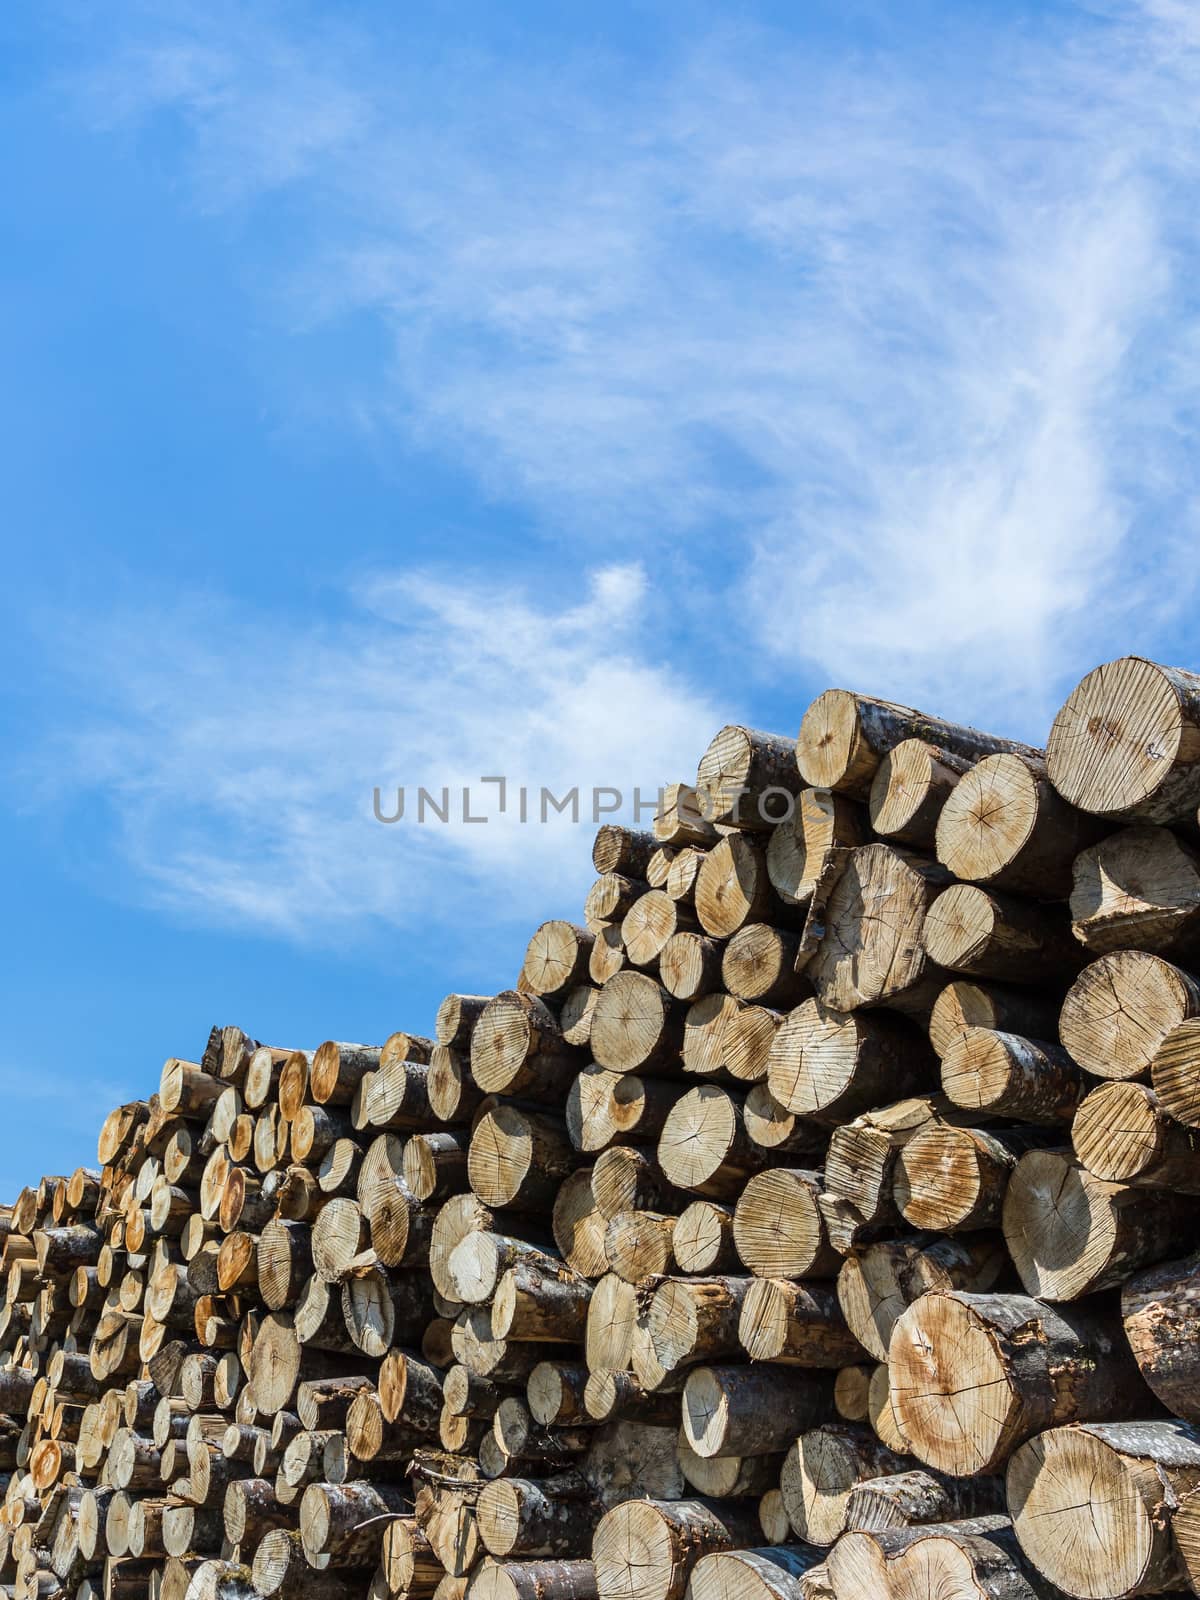 Stacks of firewood by germanopoli